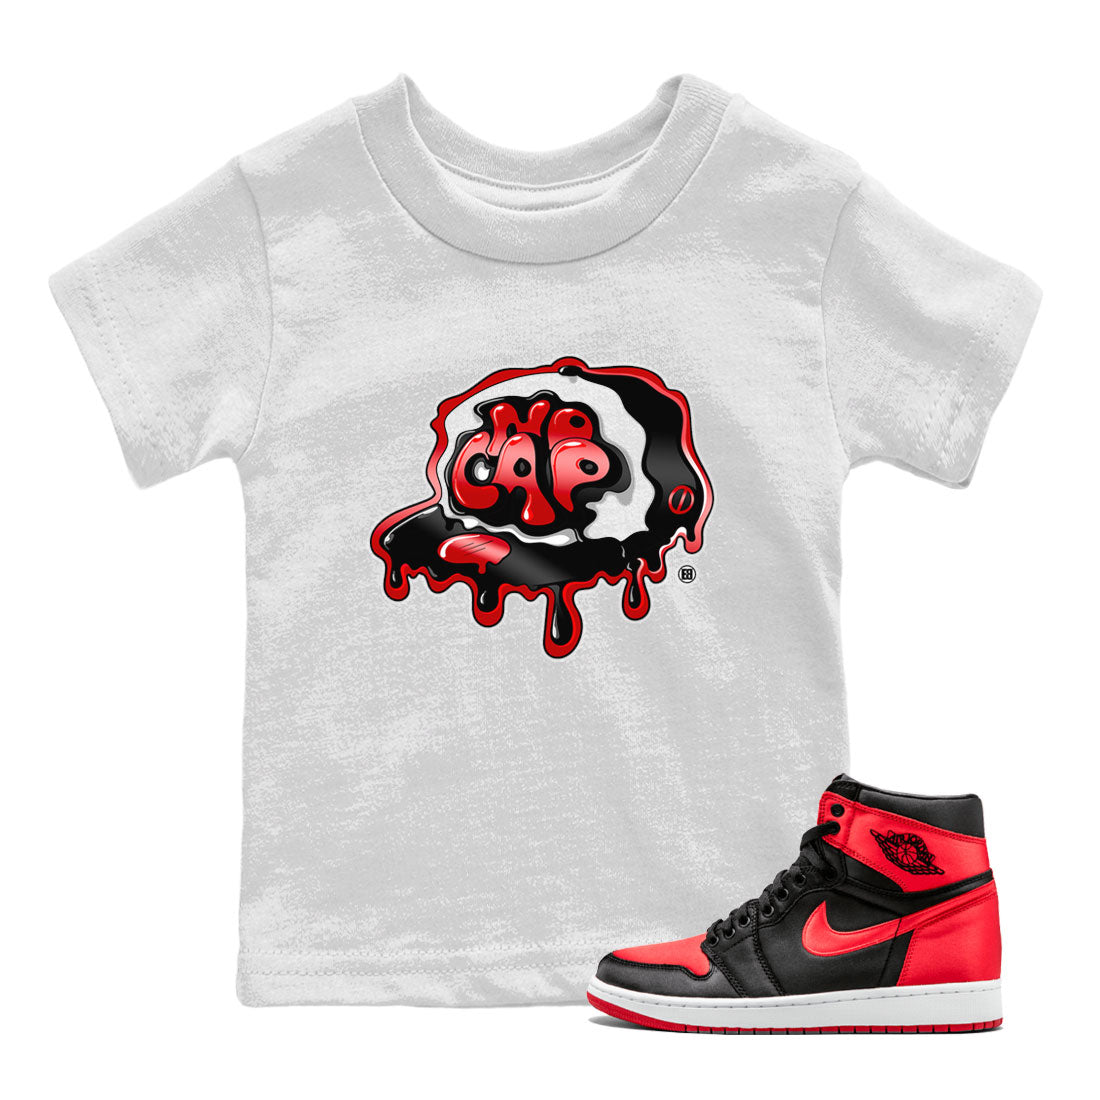 Air Jordan 1 Retro High OG Satin Bred shirt to match jordans No Cap Streetwear Sneaker Shirt Air Jordan 1 Satin Bred Drip Gear Zone Sneaker Matching Clothing Baby Toddler Kids White 1 T-Shirt